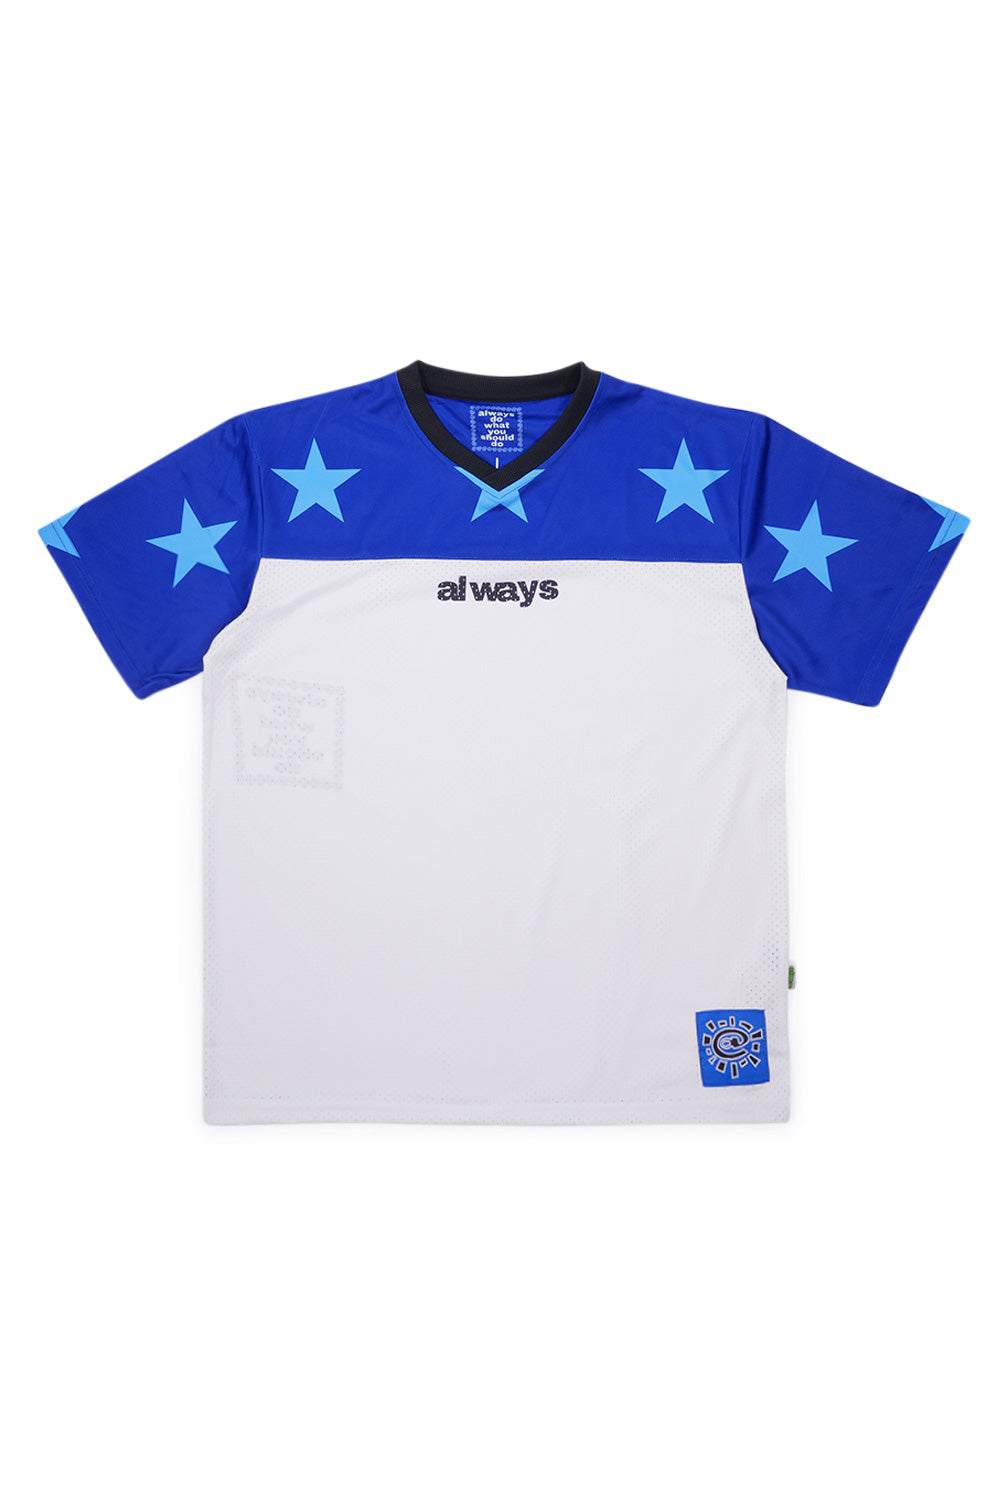 Always Micro Mesh Star Football Jersey Blue / Navy - BONKERS